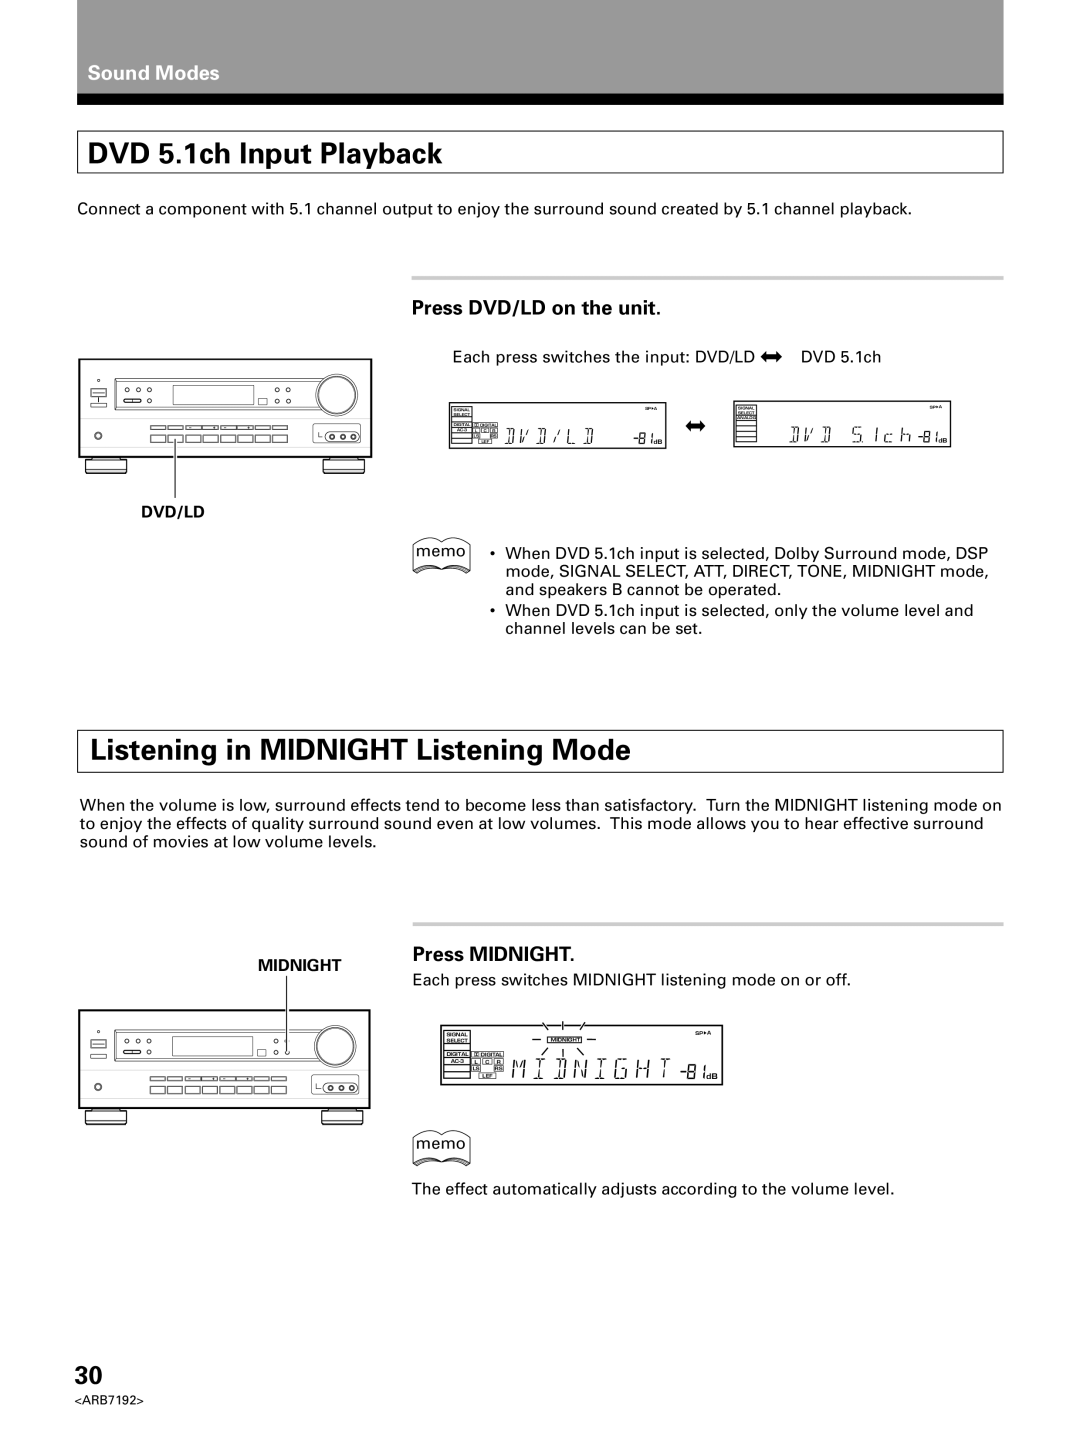 Pioneer VSX-D498 DVD 5.1ch Input Playback, Listening in MIDNIGHT Listening Mode, Press DVD/LD on the unit, Press MIDNIGHT 